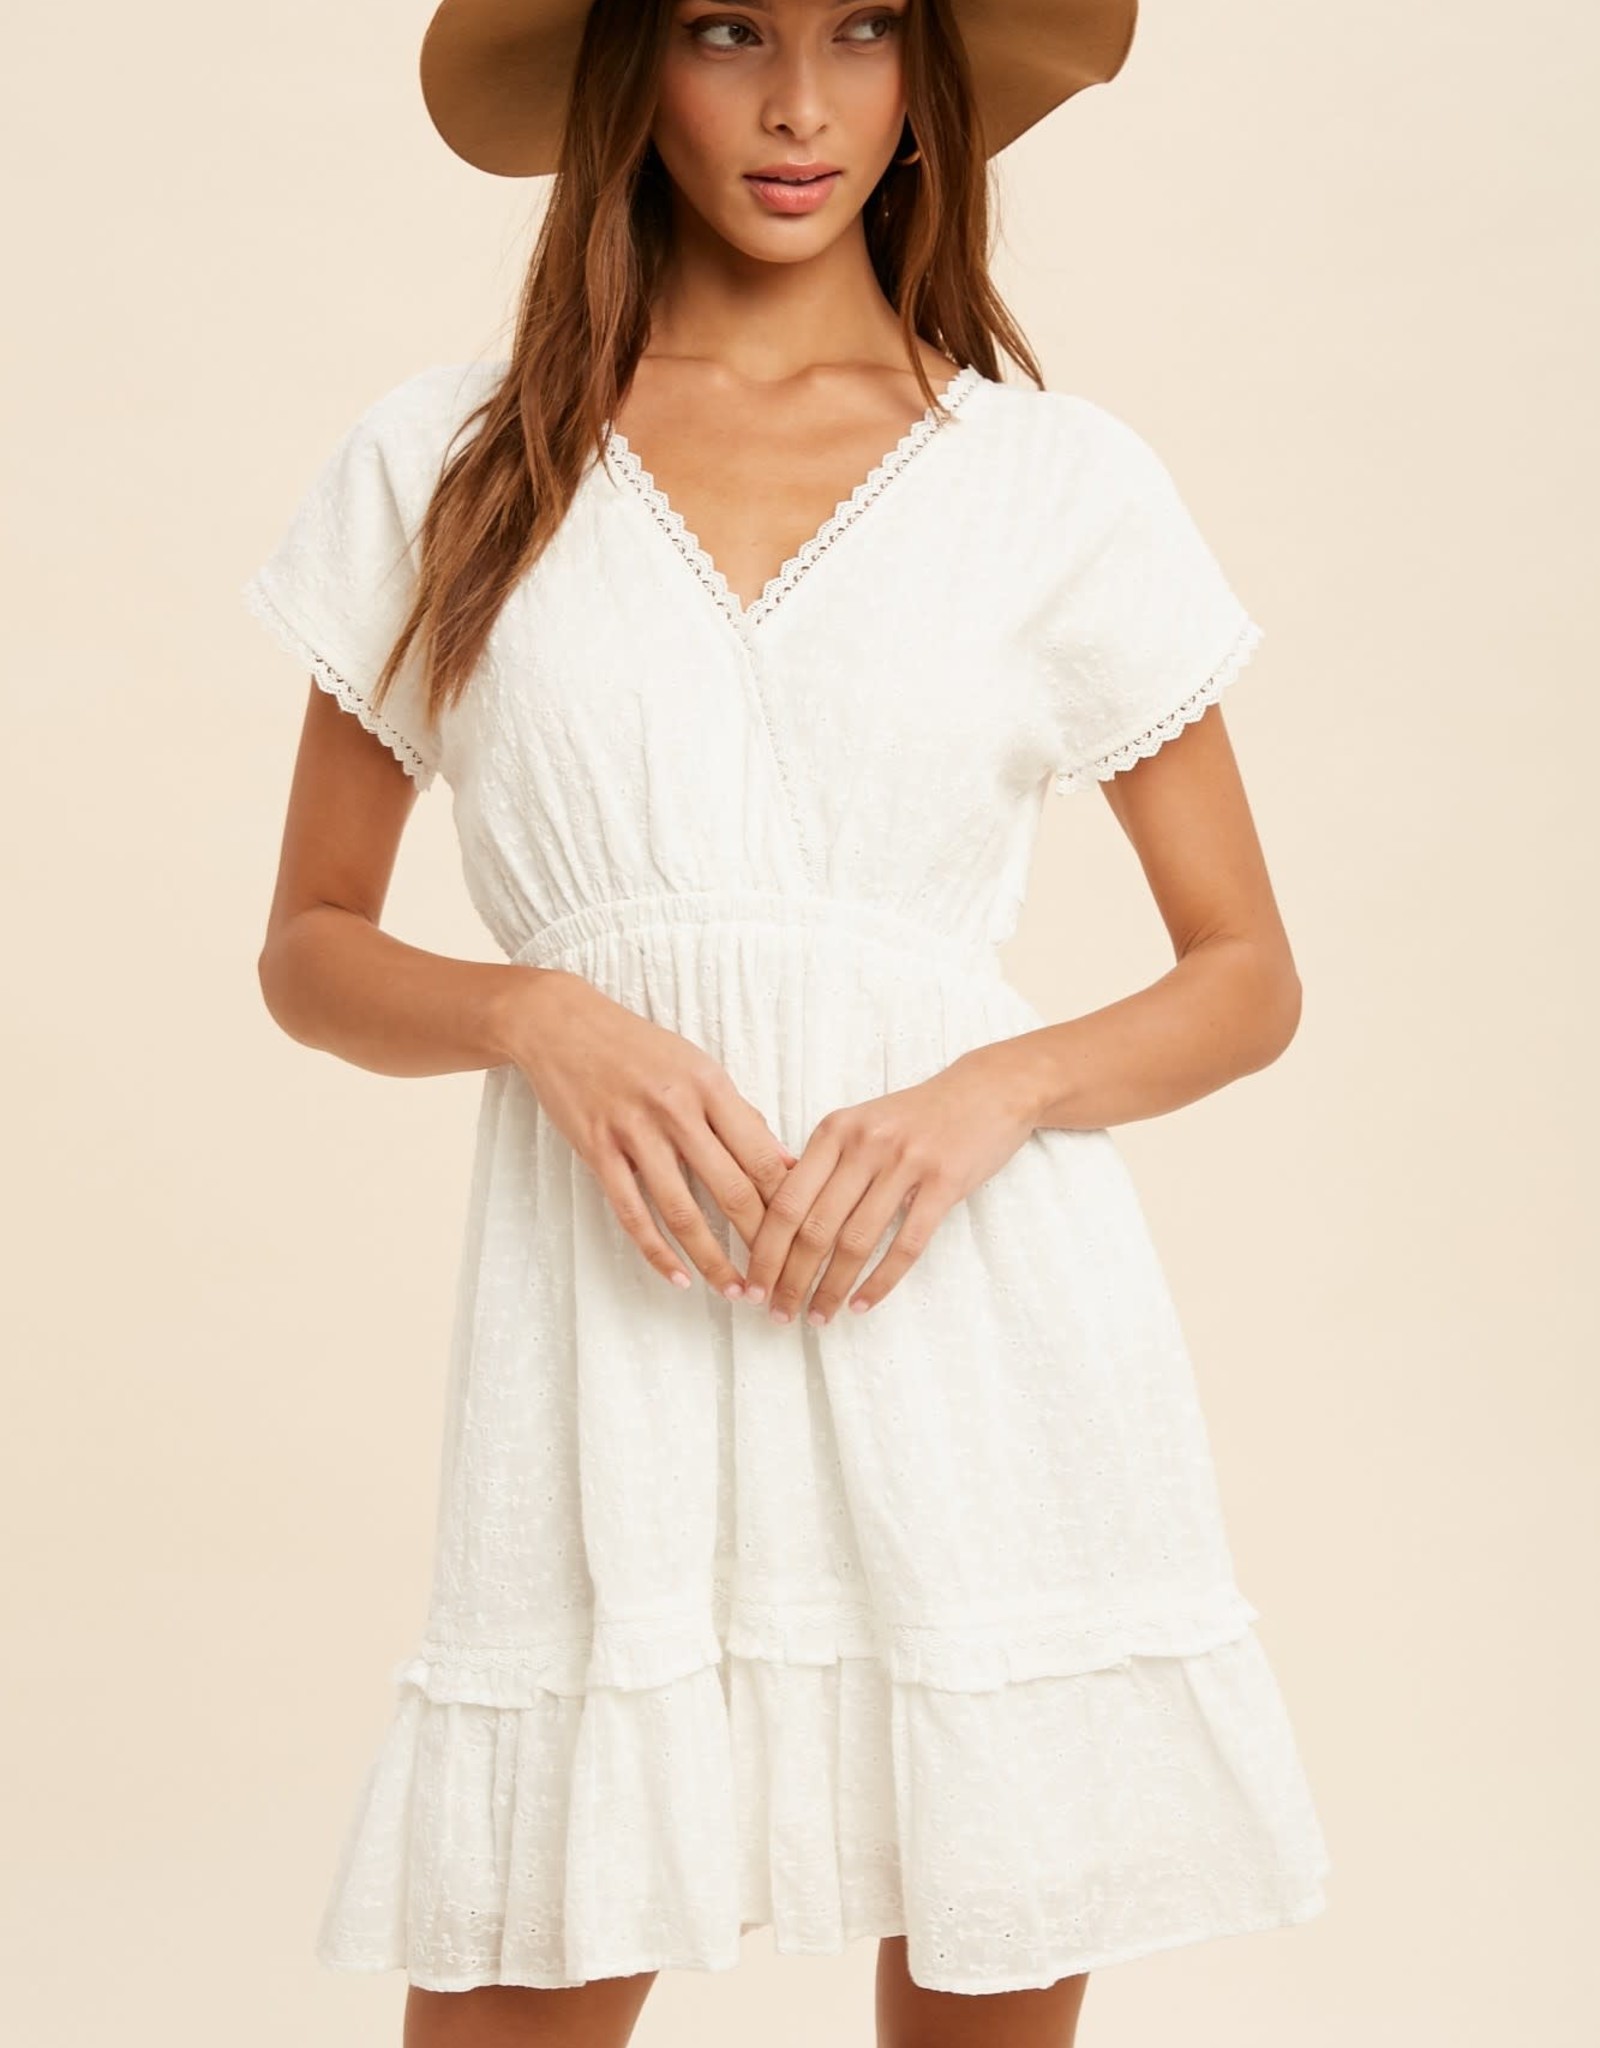 Miss Bliss Eyelet Lace Trim Mini Dress- Off White